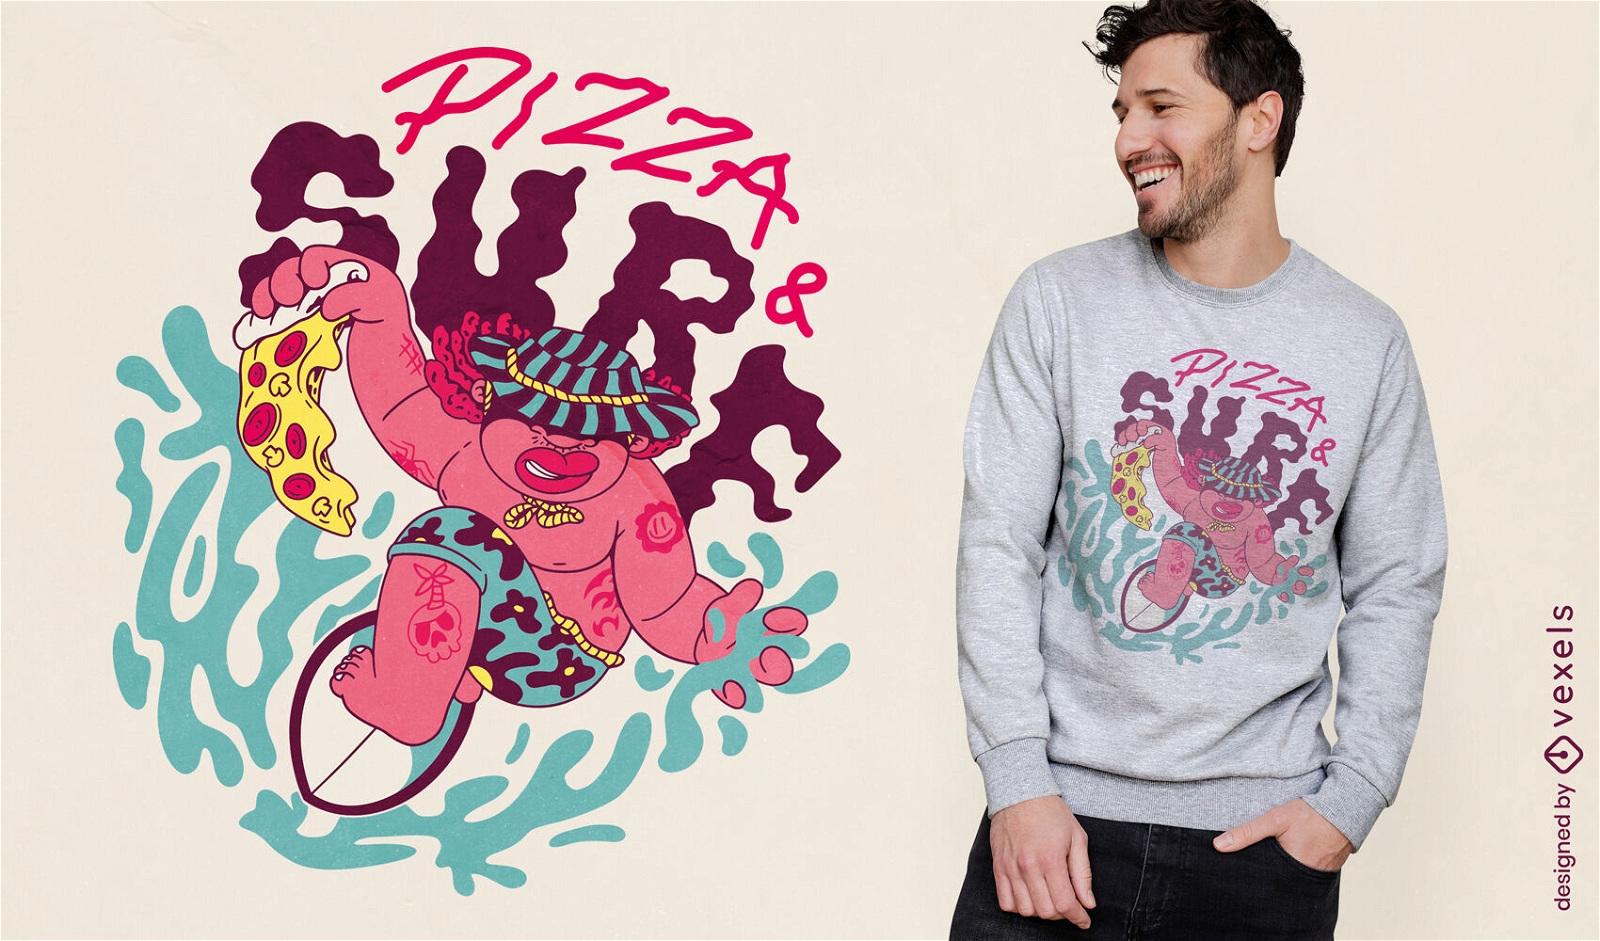 Mann surft mit Pizza-T-Shirt-Design